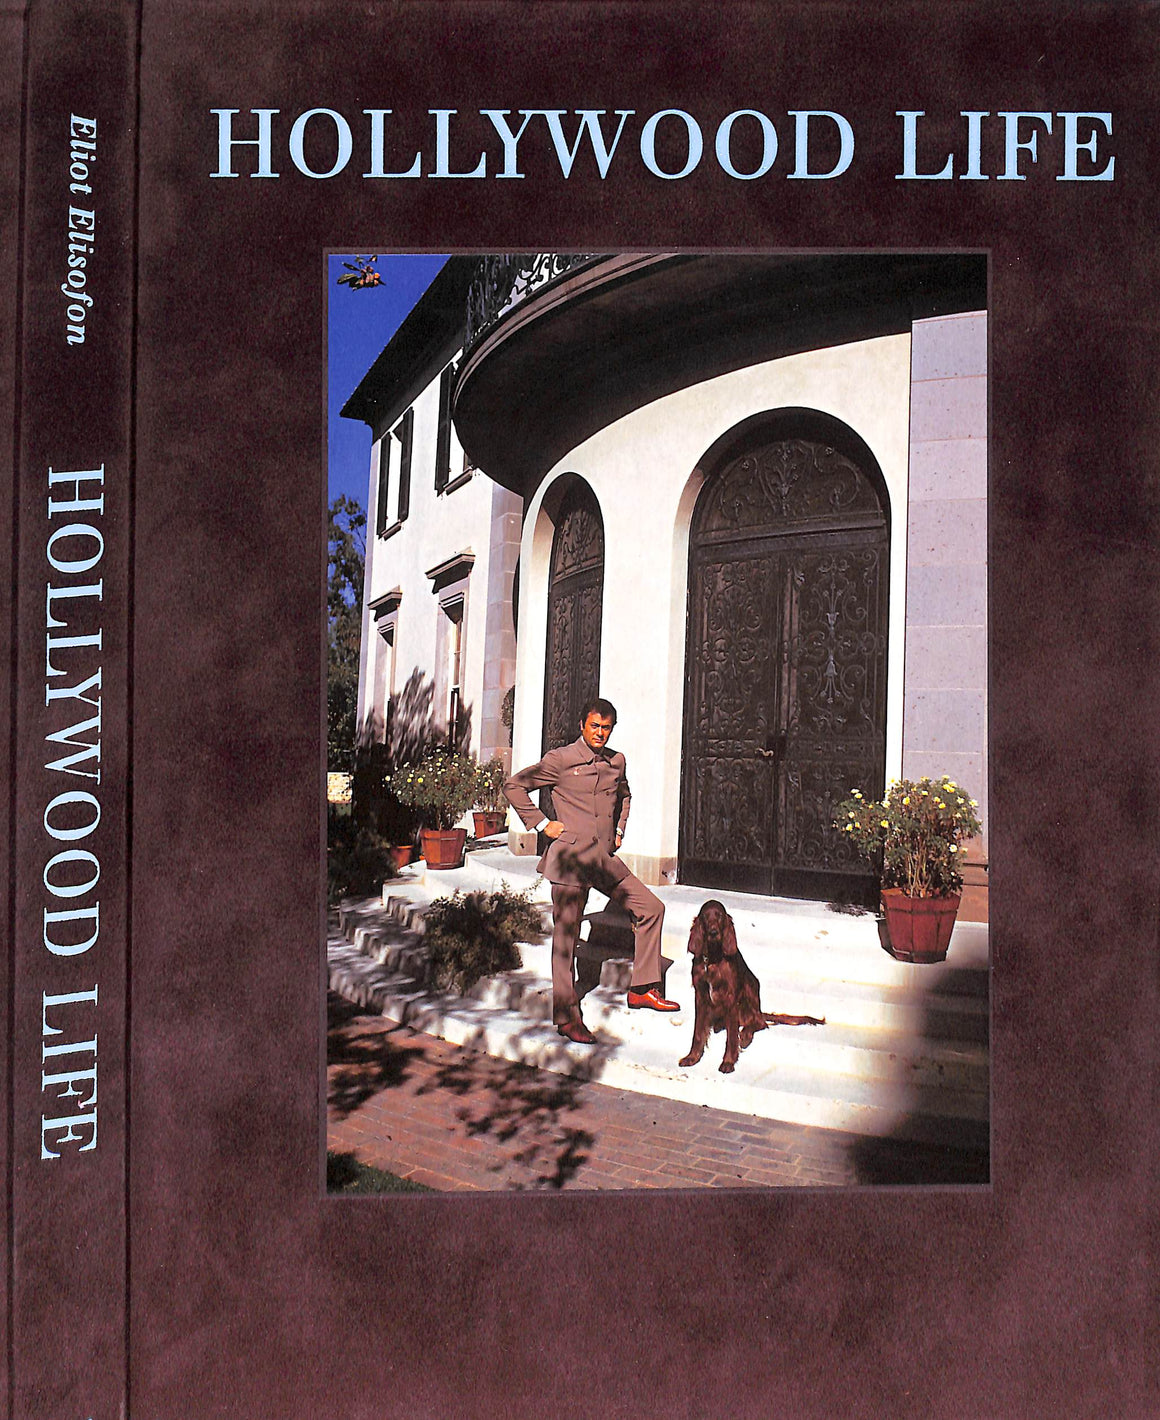 "Hollywood Life: The Glamorous Homes Of Vintage Hollywood" 2004 ELISOFON, Eliot [photographs by]